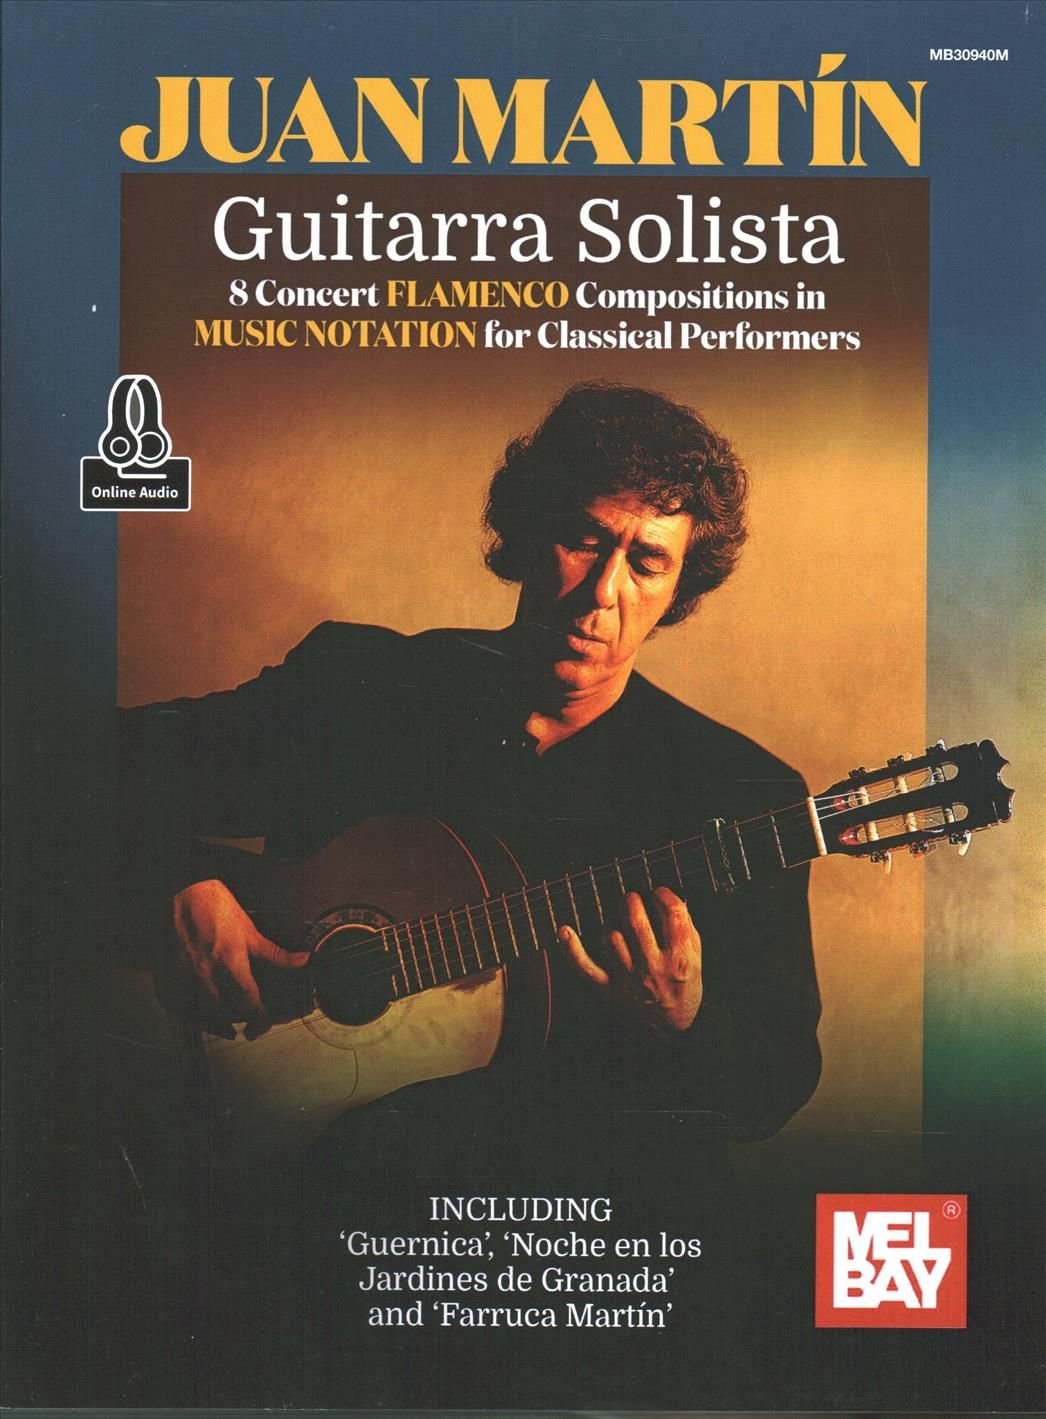 Play Solo Flamenco Guitar with Juan Martin Vol. 1: Guitarra Flamenca-42  Solos See more